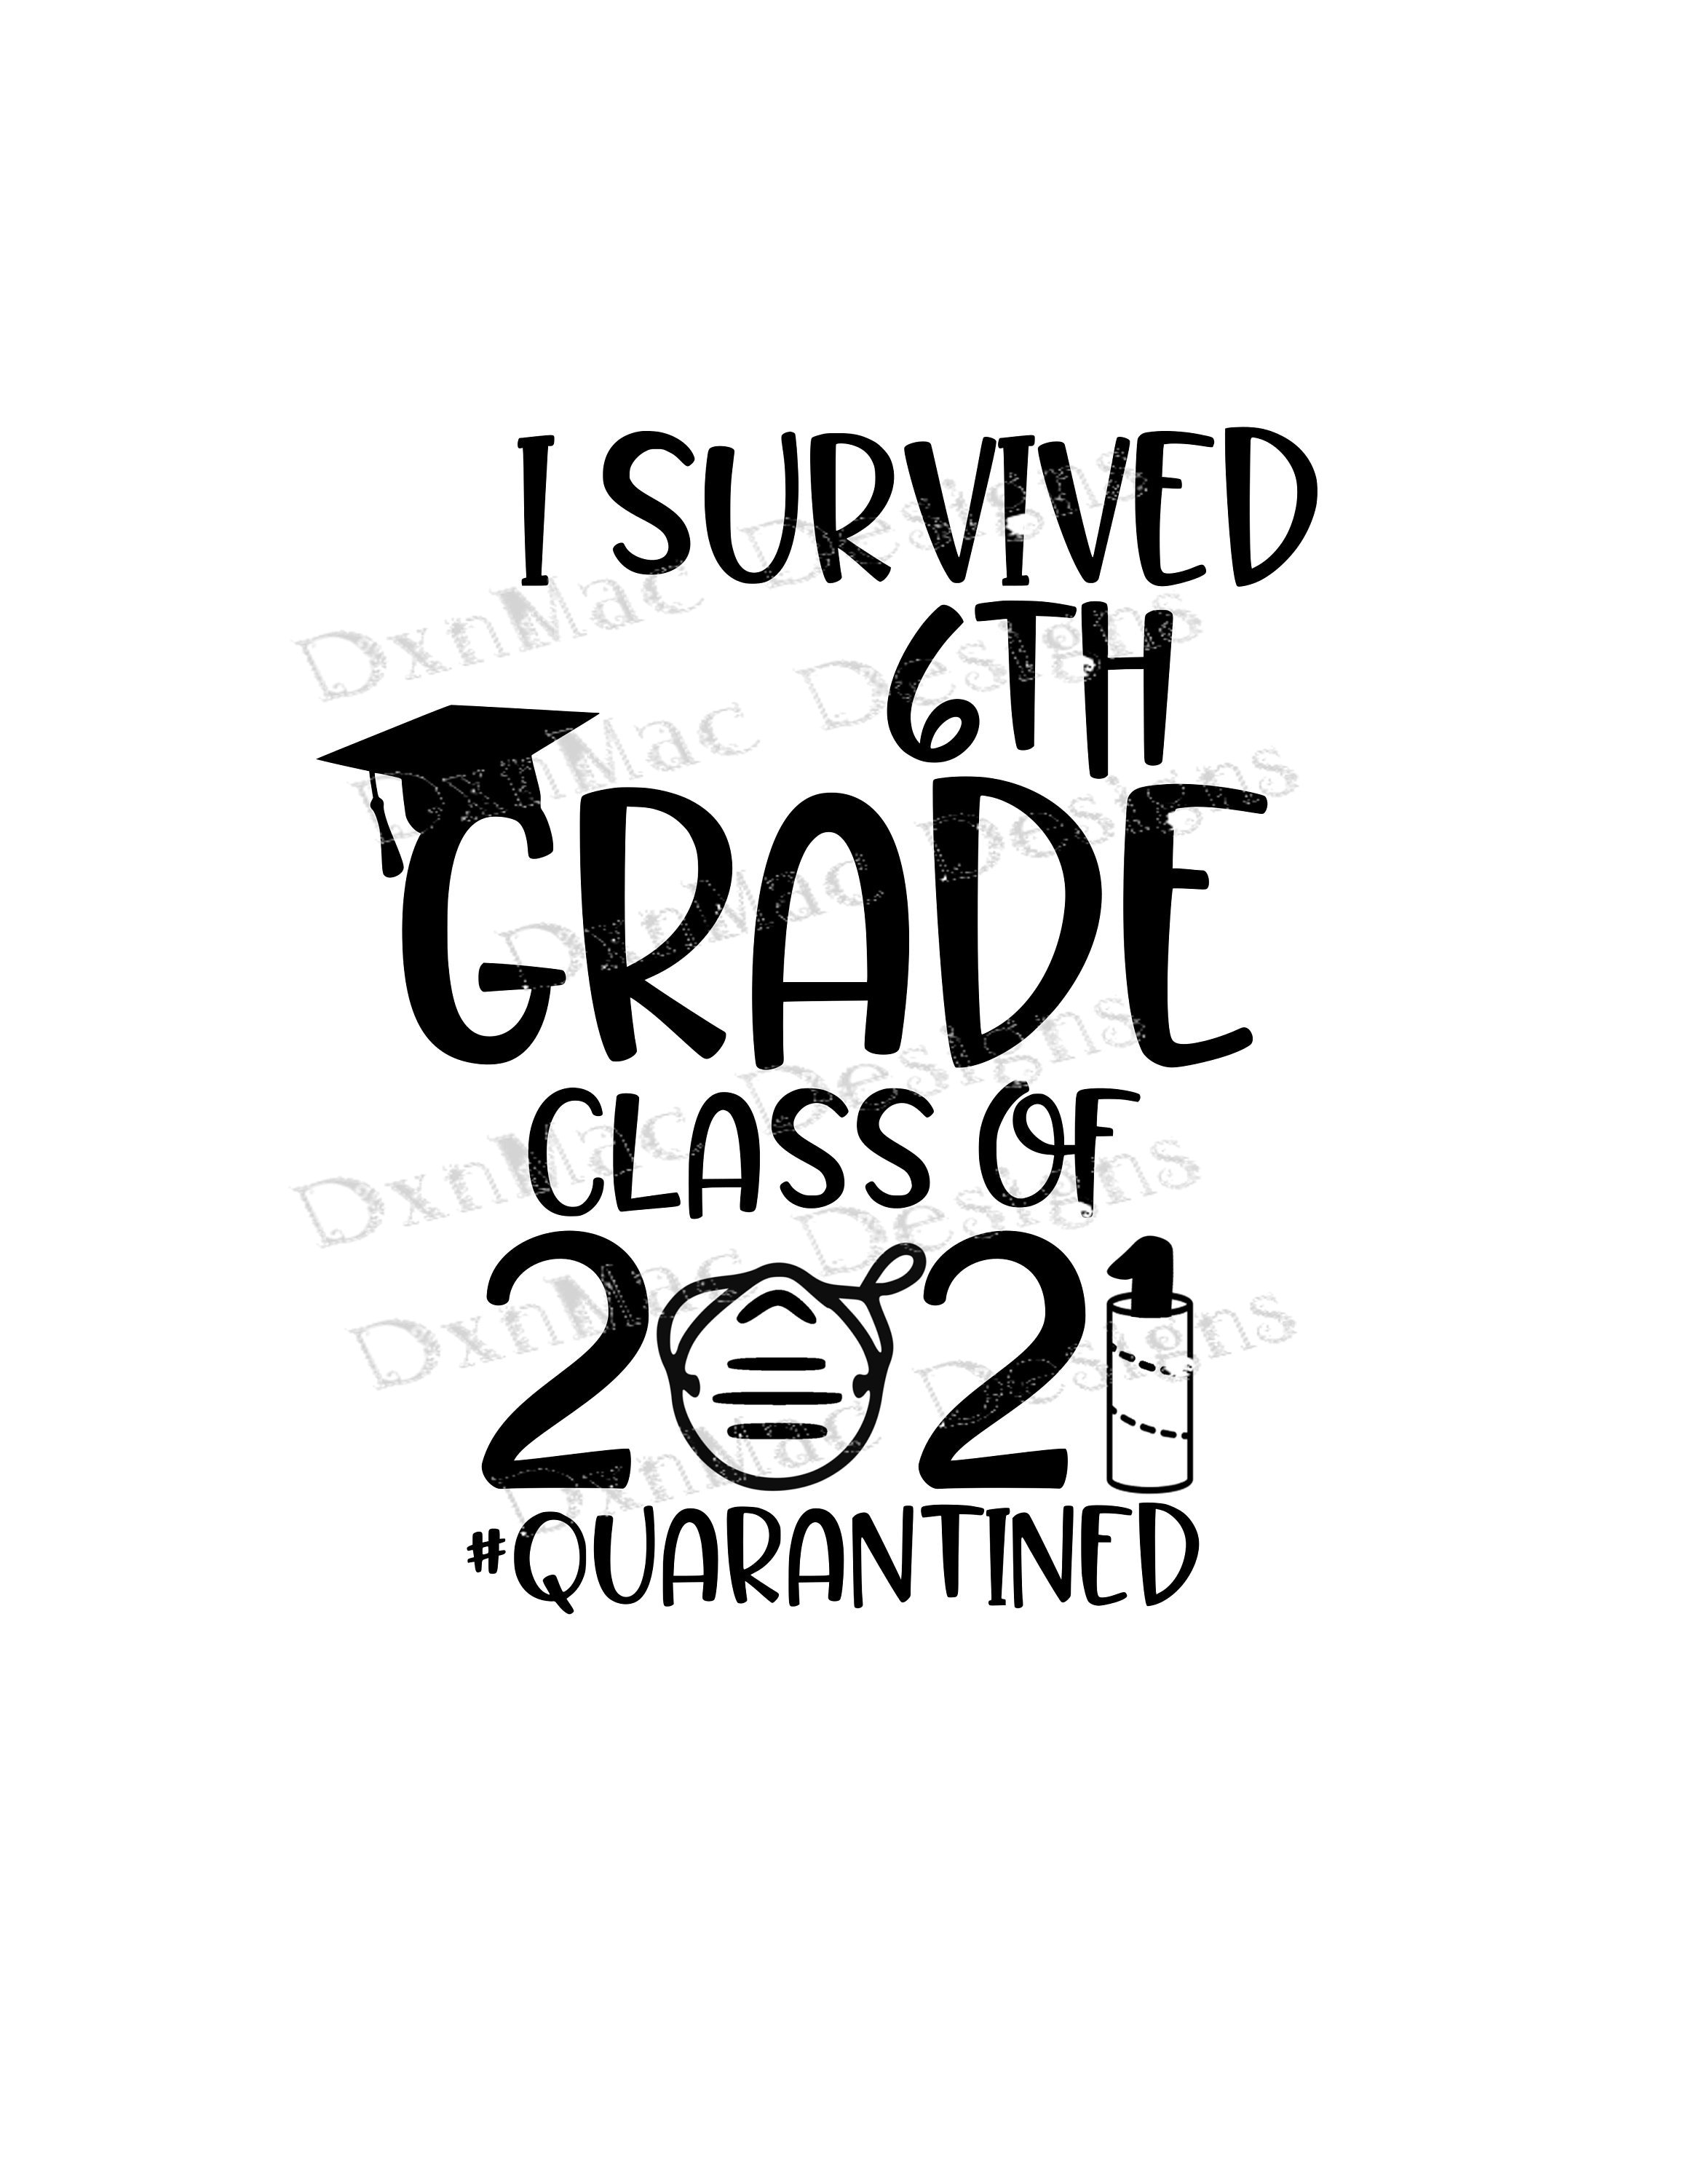 6th grade graduation clip art